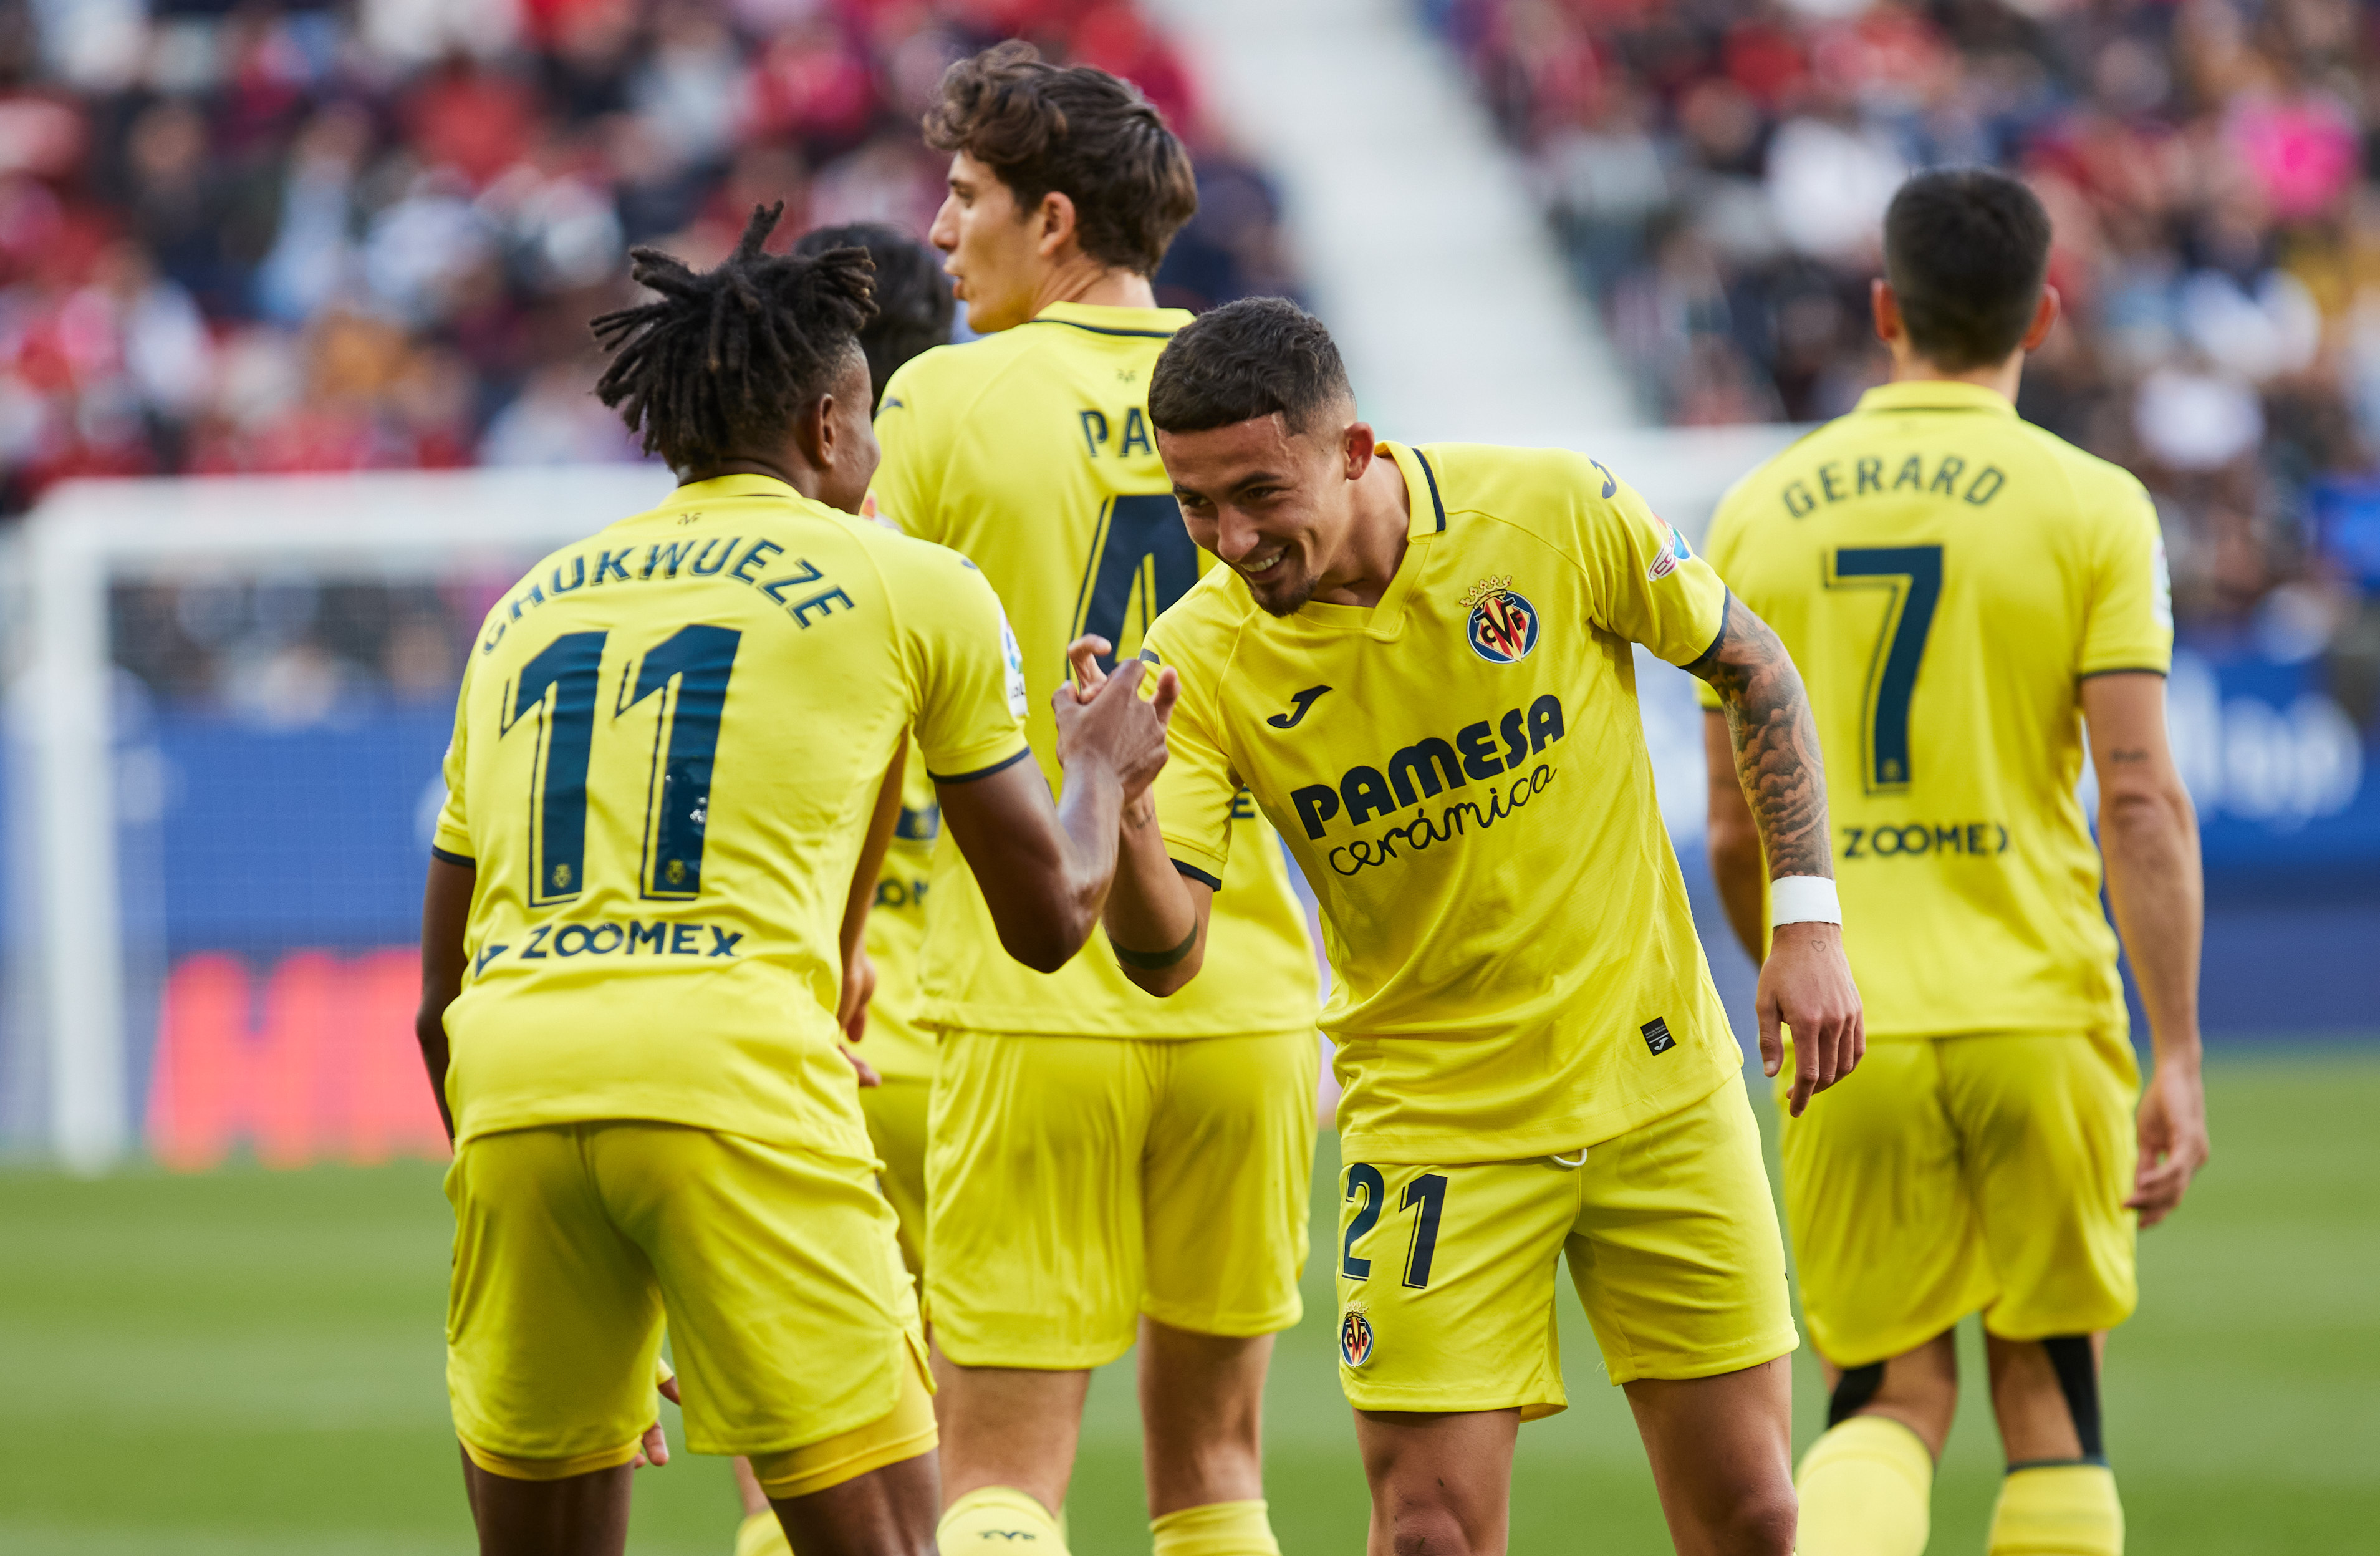 Resumen y goles del Osasuna vs Villarreal, jornada 26 de LaLiga Santander